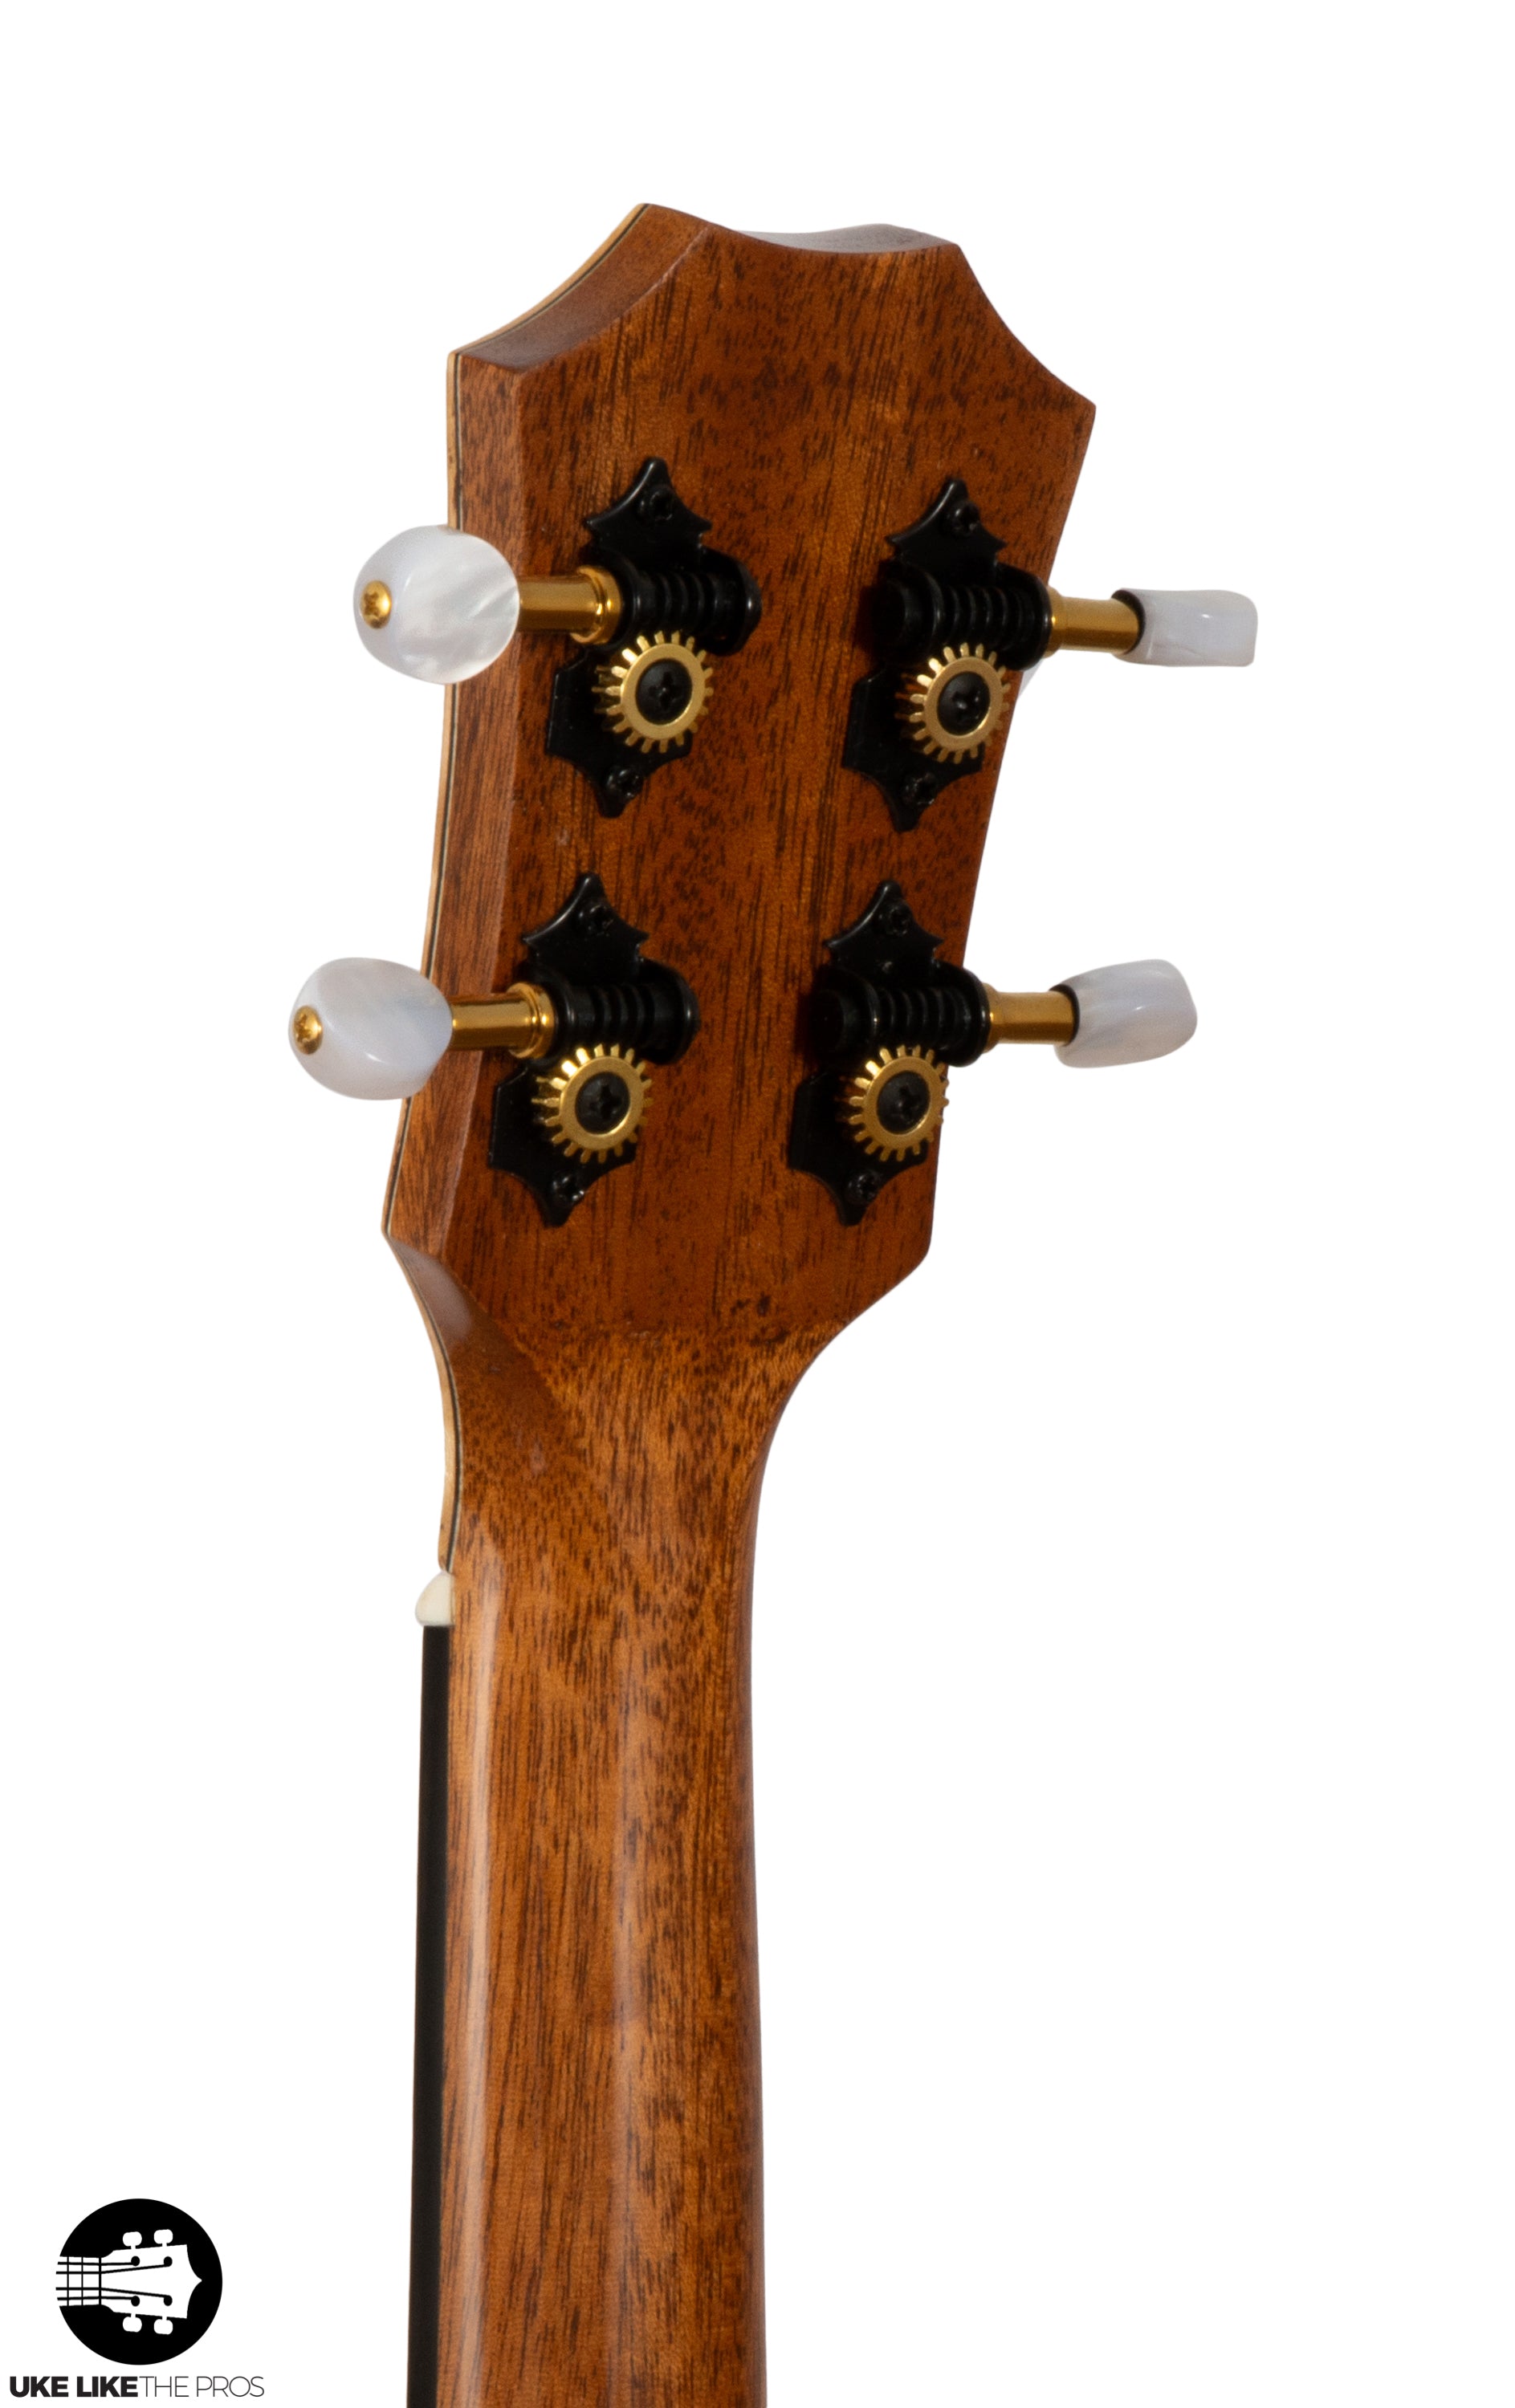 Guitarras Romero Model-T Custom Tenor Ukulele PROTOTYPE #1